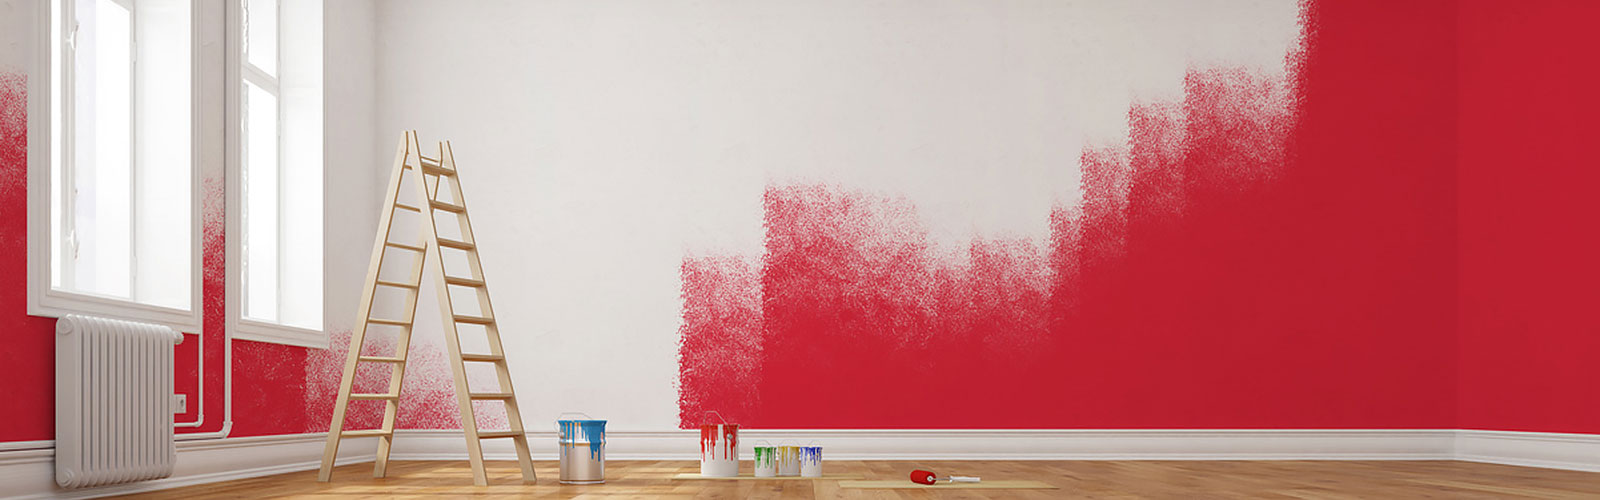 Malermeister - Theo Schorn | Raum, rote Wandfarbe, Leiter